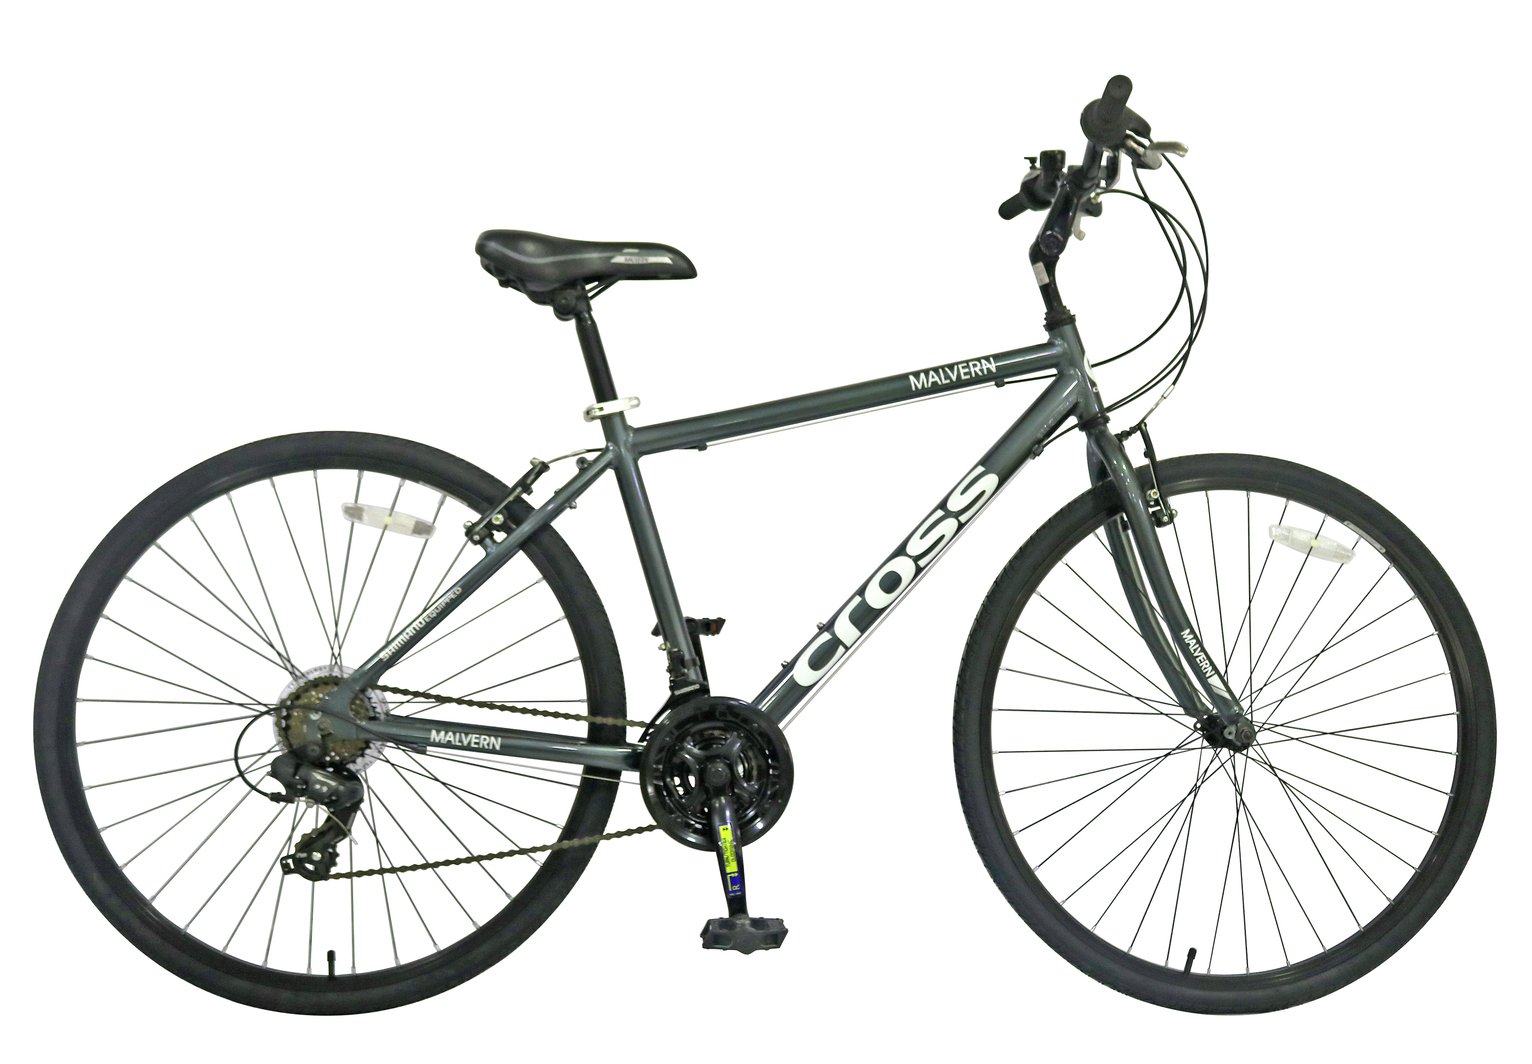 28 inch hybrid bike